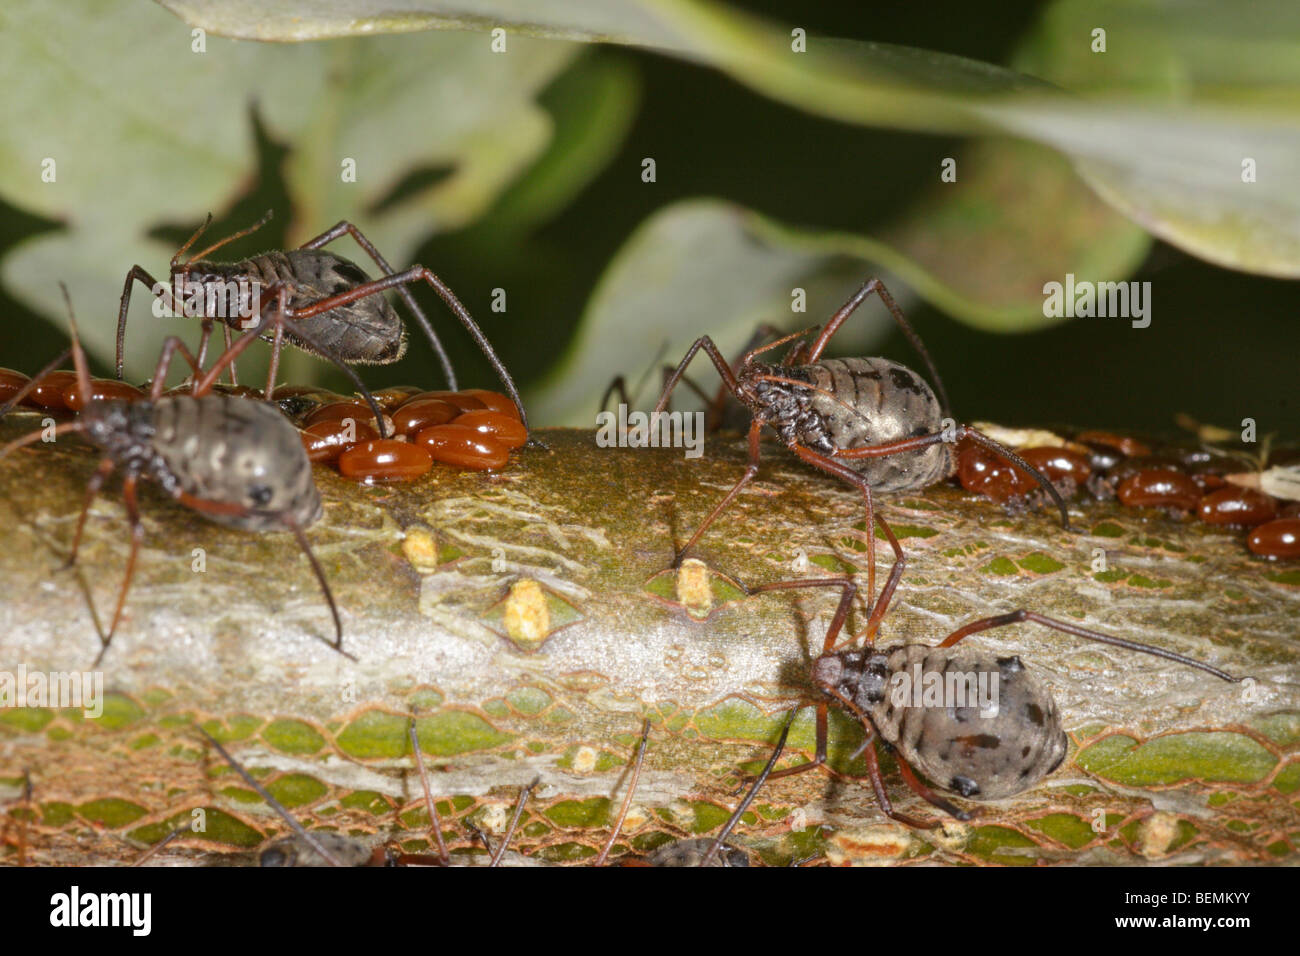 Lachnus roboris, an aphid that feeds on oak. The females guard freshly laid eggs. Stock Photo